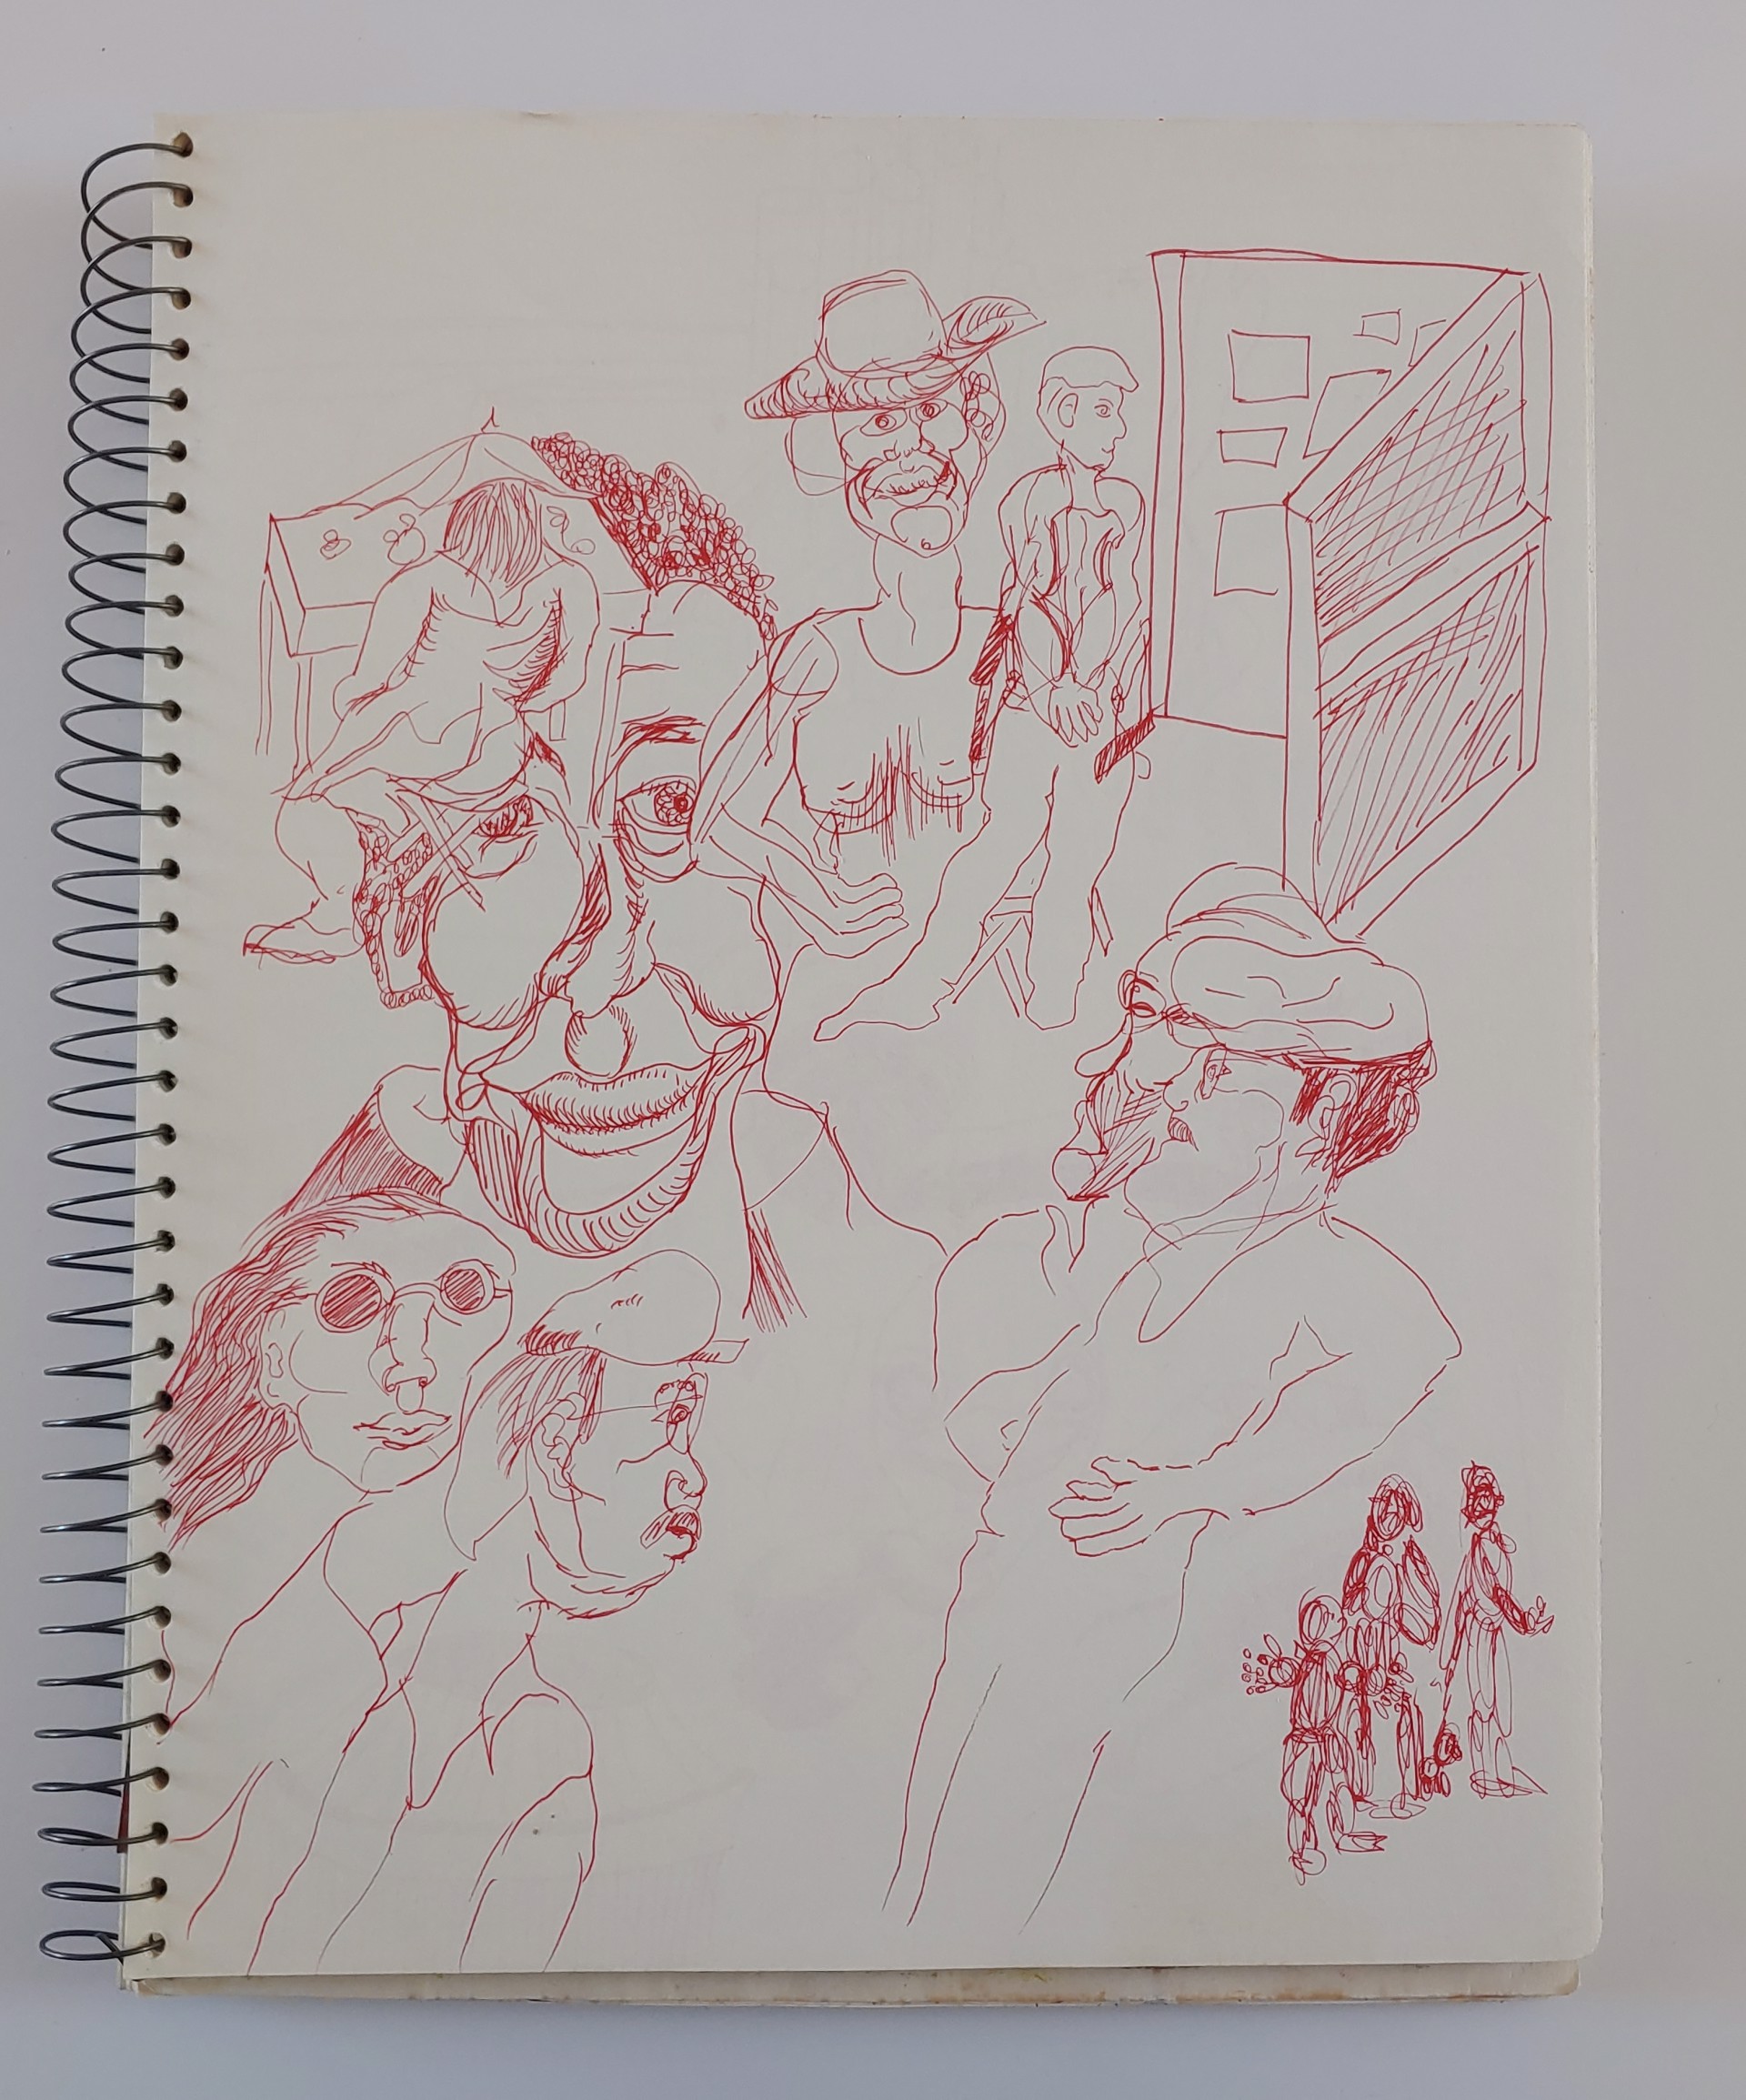 Undated Sketchbook by David Amdur